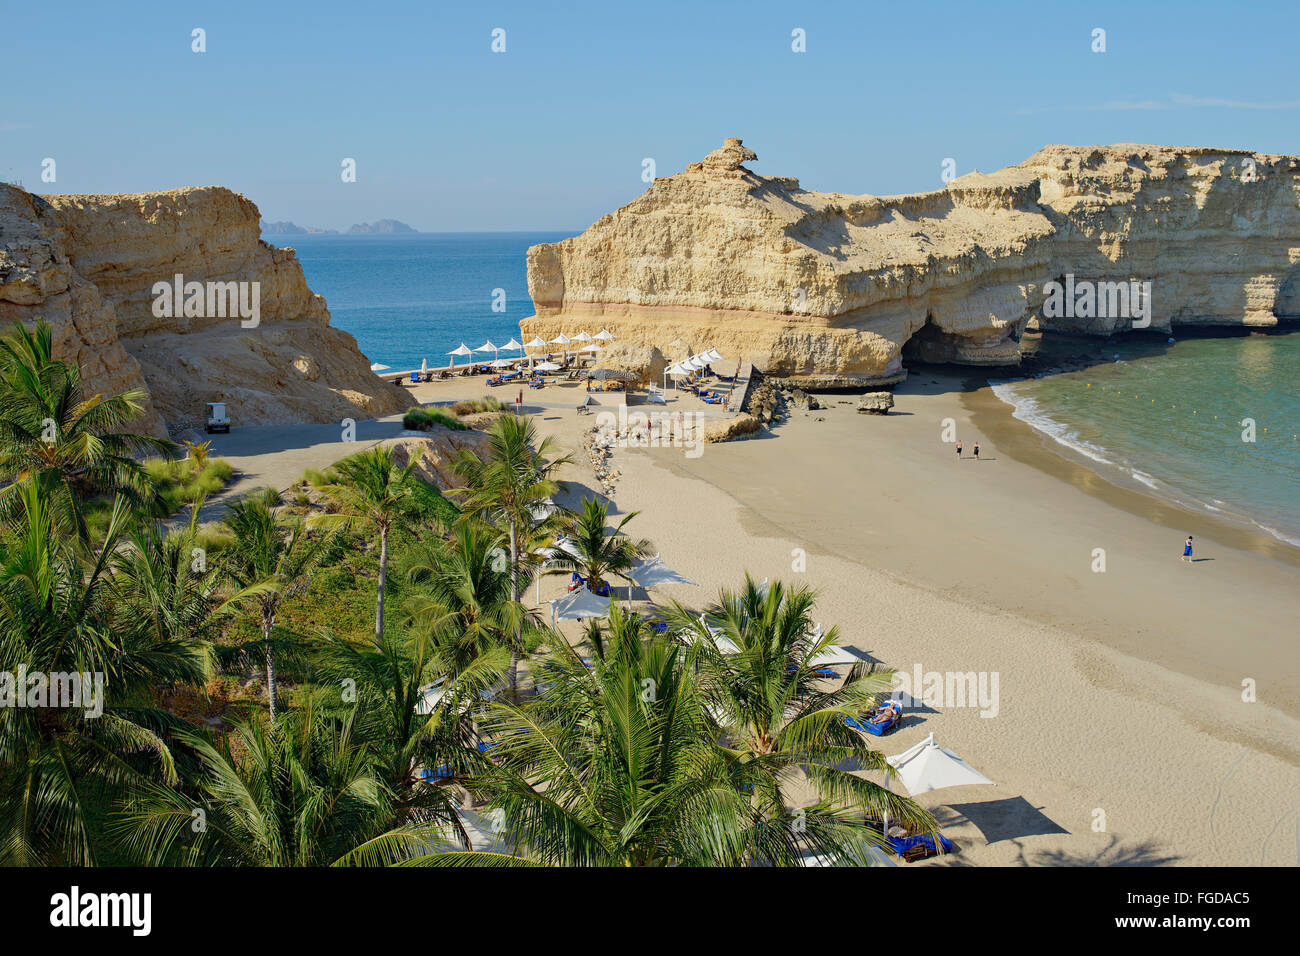 Shangri-La Hotel on the coast of Arabian Sea, Oman. Stock Photo